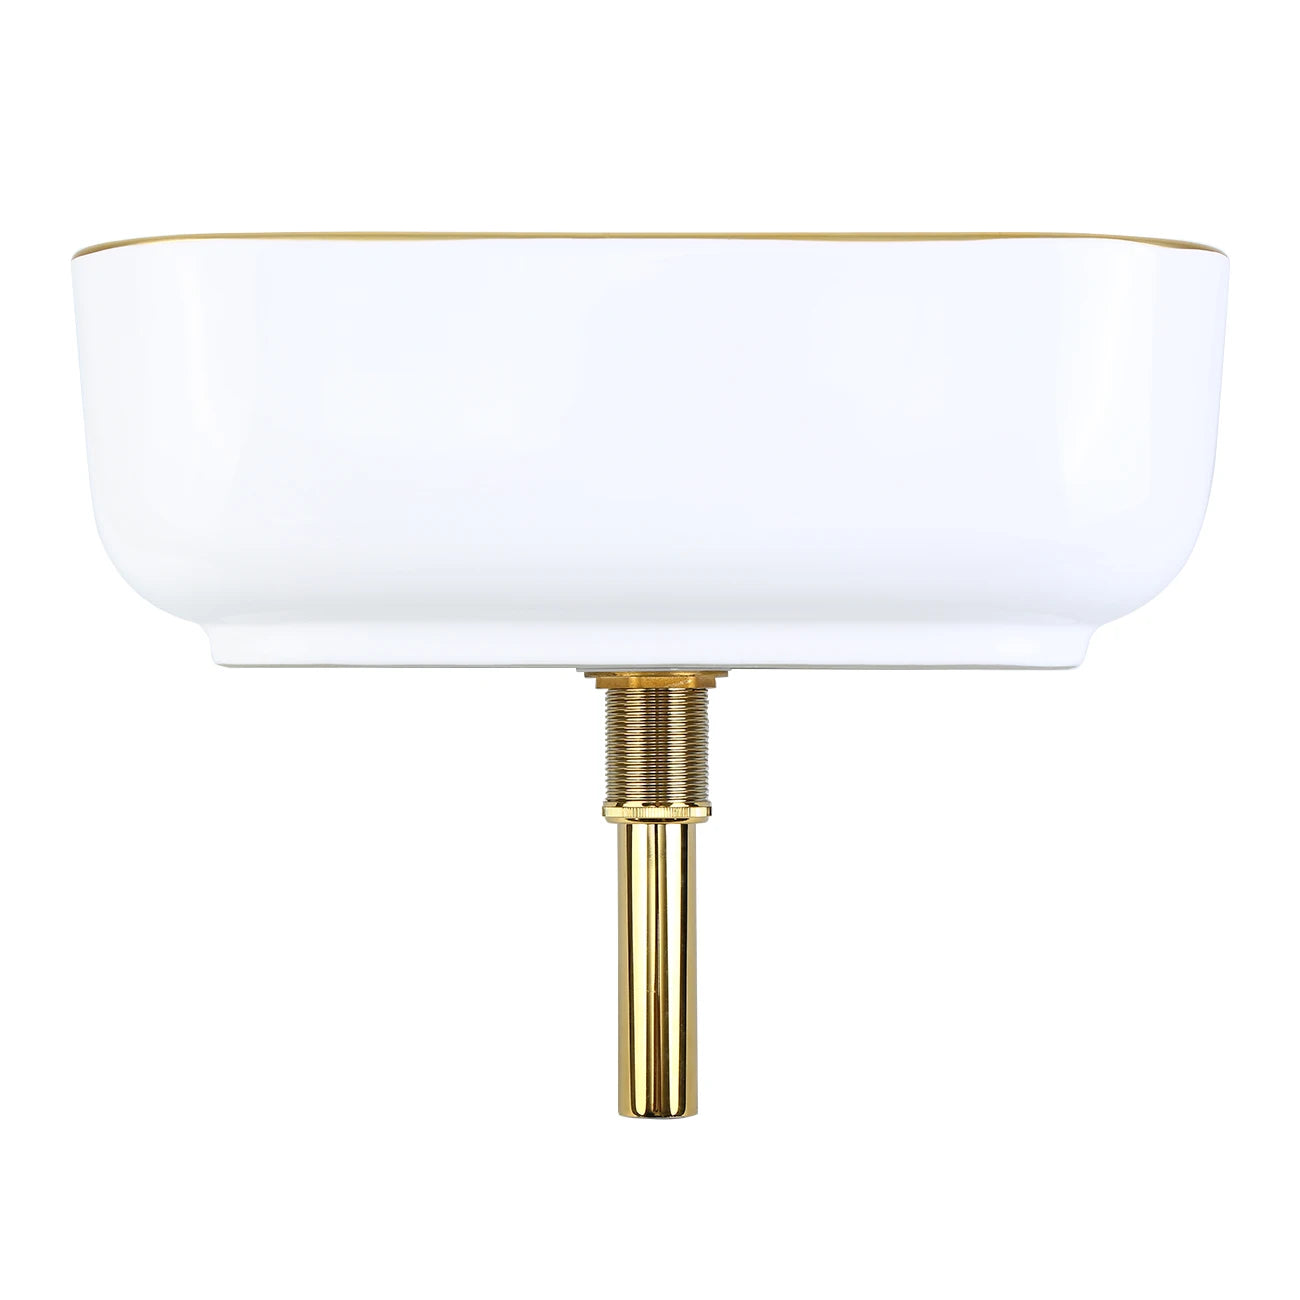 Bathroom Vessel Sink Bowl Hometure Above Ceramic Vanity Basin Sink Rectangle